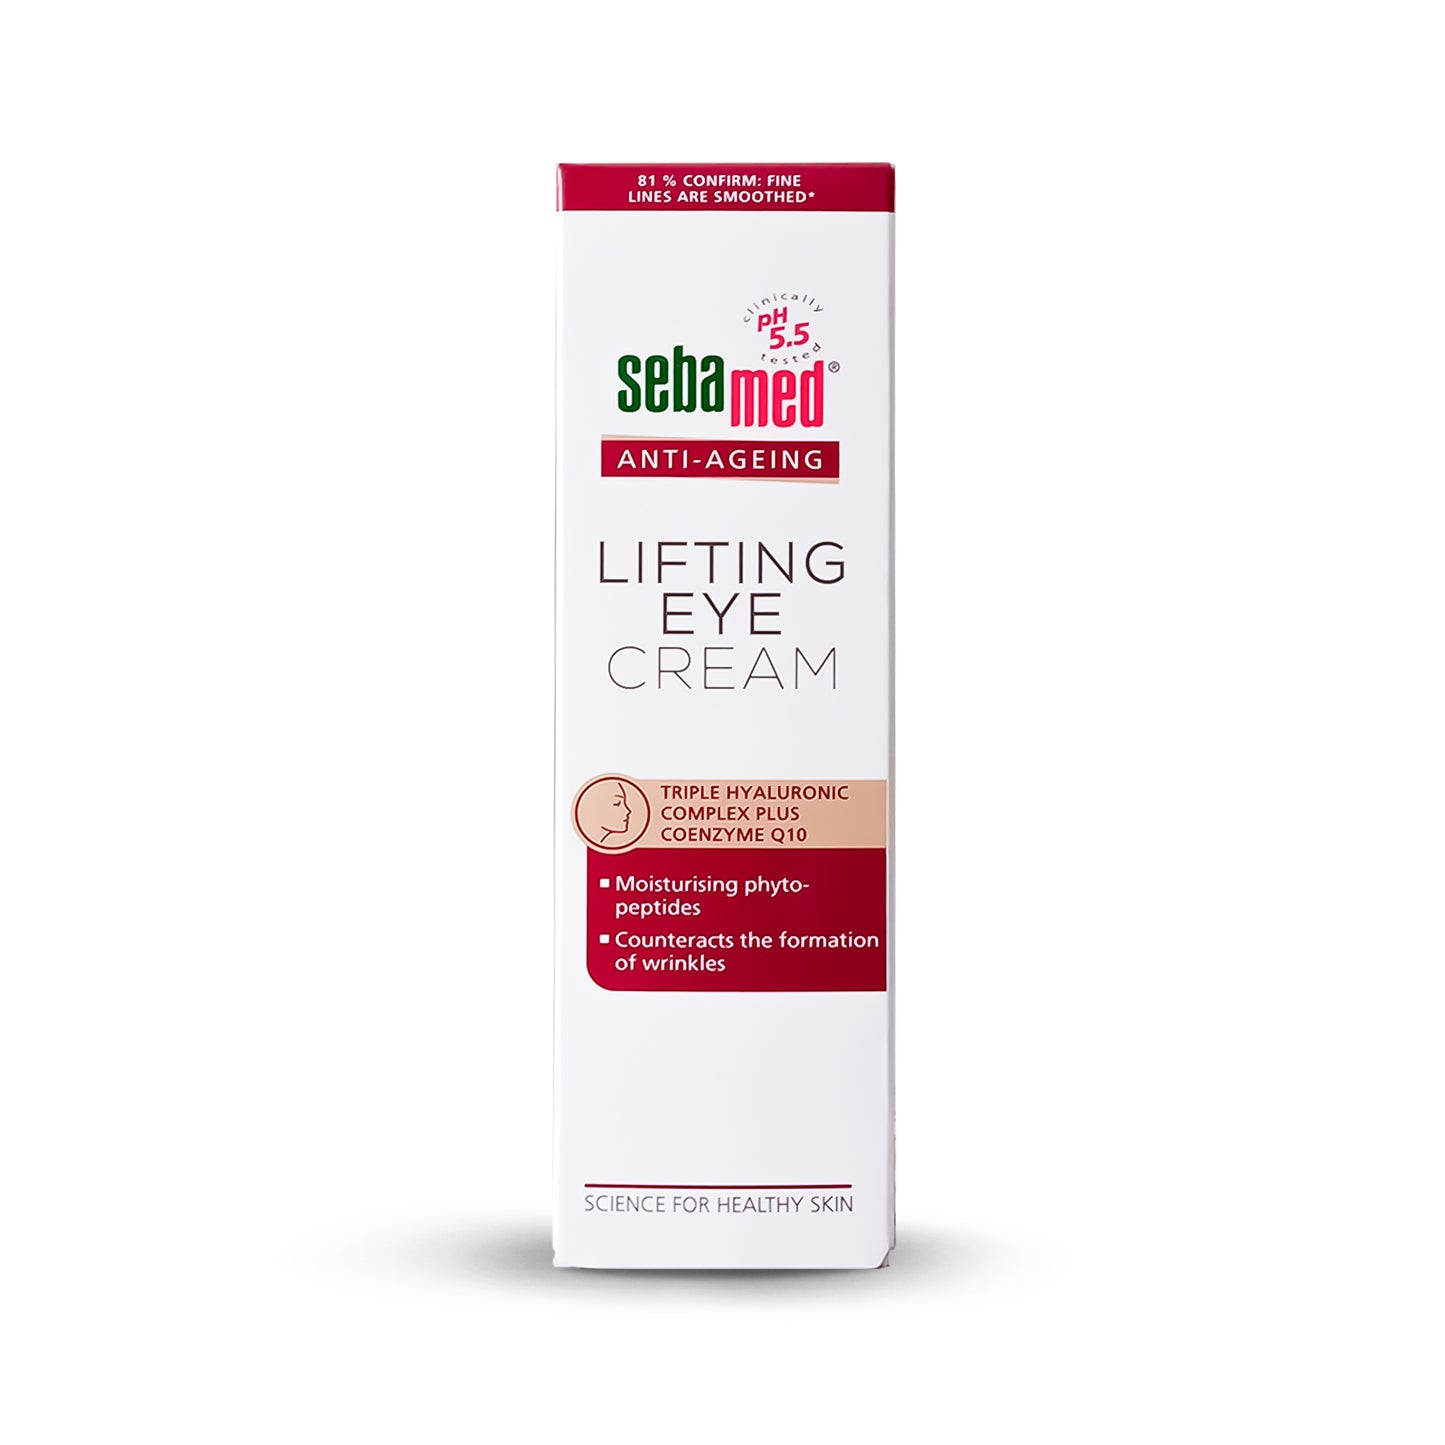 Sebamed Anti-Ageing Q10 Lifting Eye Cream, 15ml